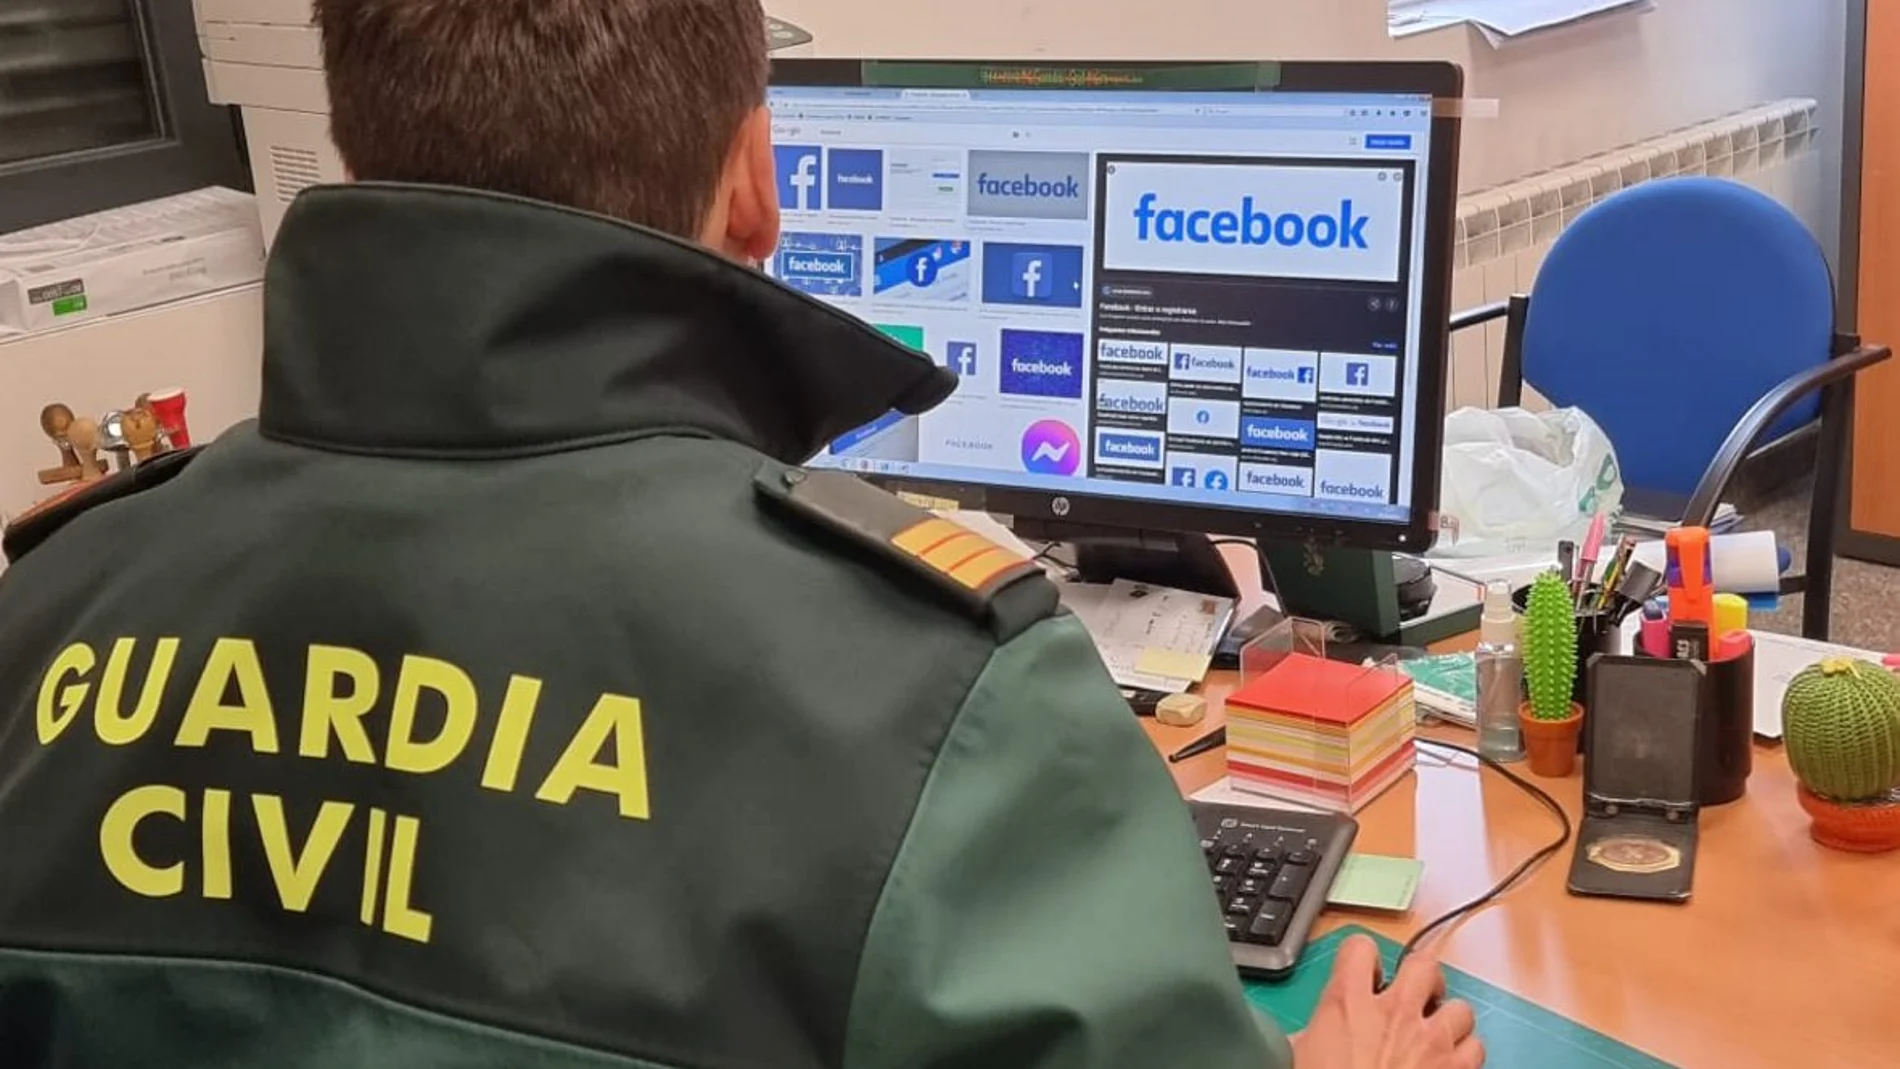 La Guardia Civil descubrió la fiesta a través de las redes sociales